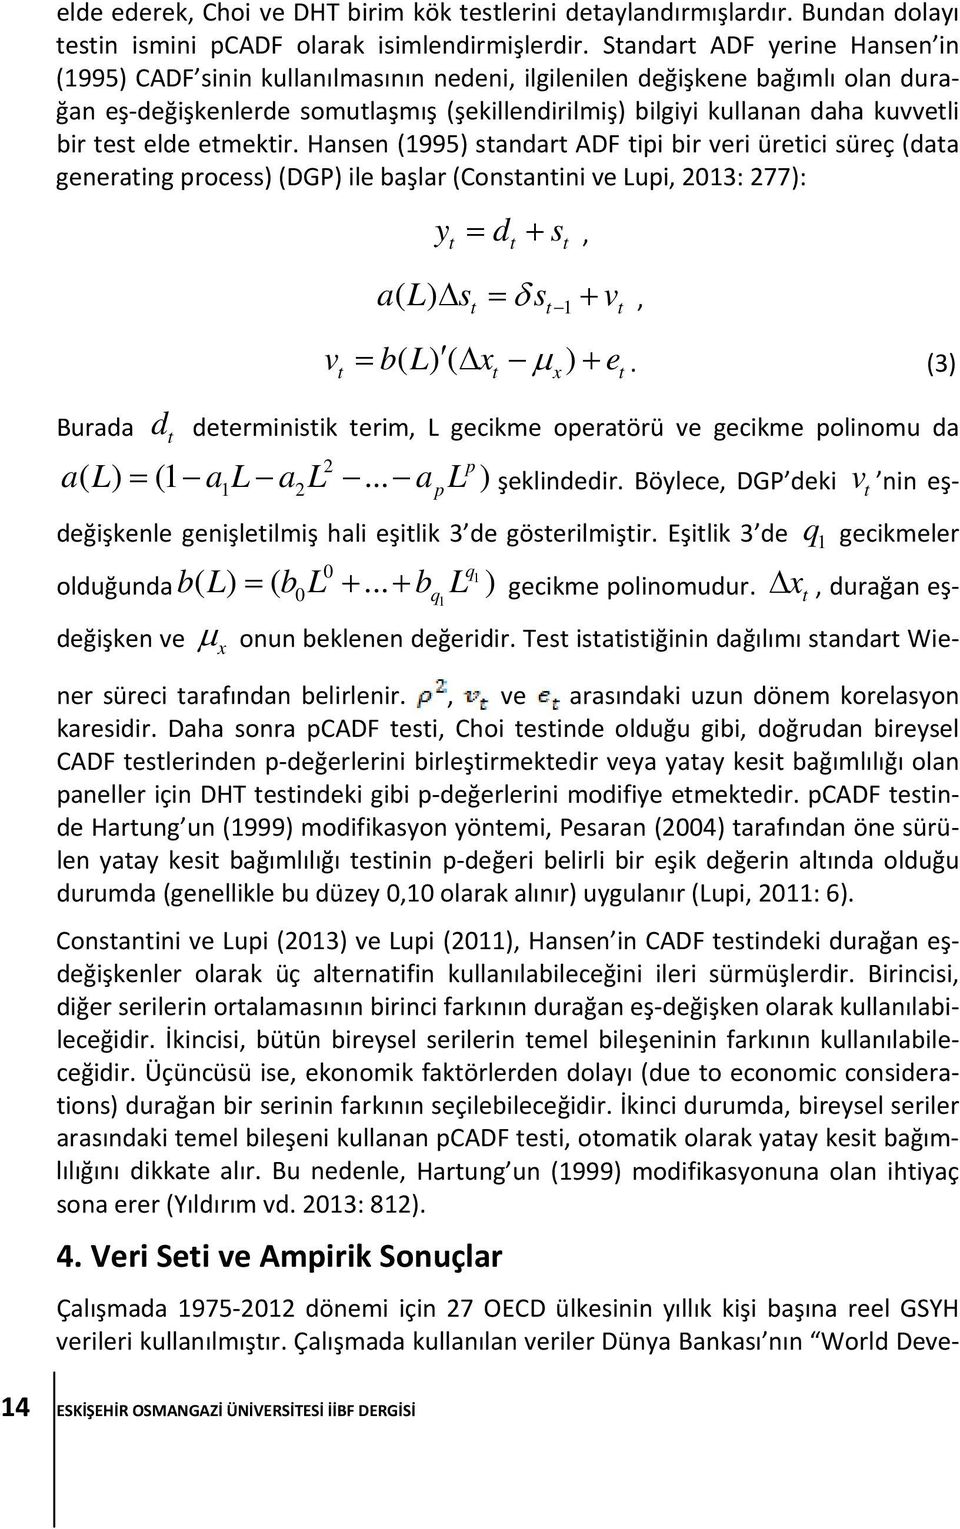 test elde etmektir. Hansen (1995) standart ADF tipi bir veri üretici süreç (data generating process) (DGP) ile başlar (Constantini ve Lupi, 2013: 277): yt dt st, als s v, ( ) t t 1 t v b( L)( x ) e.